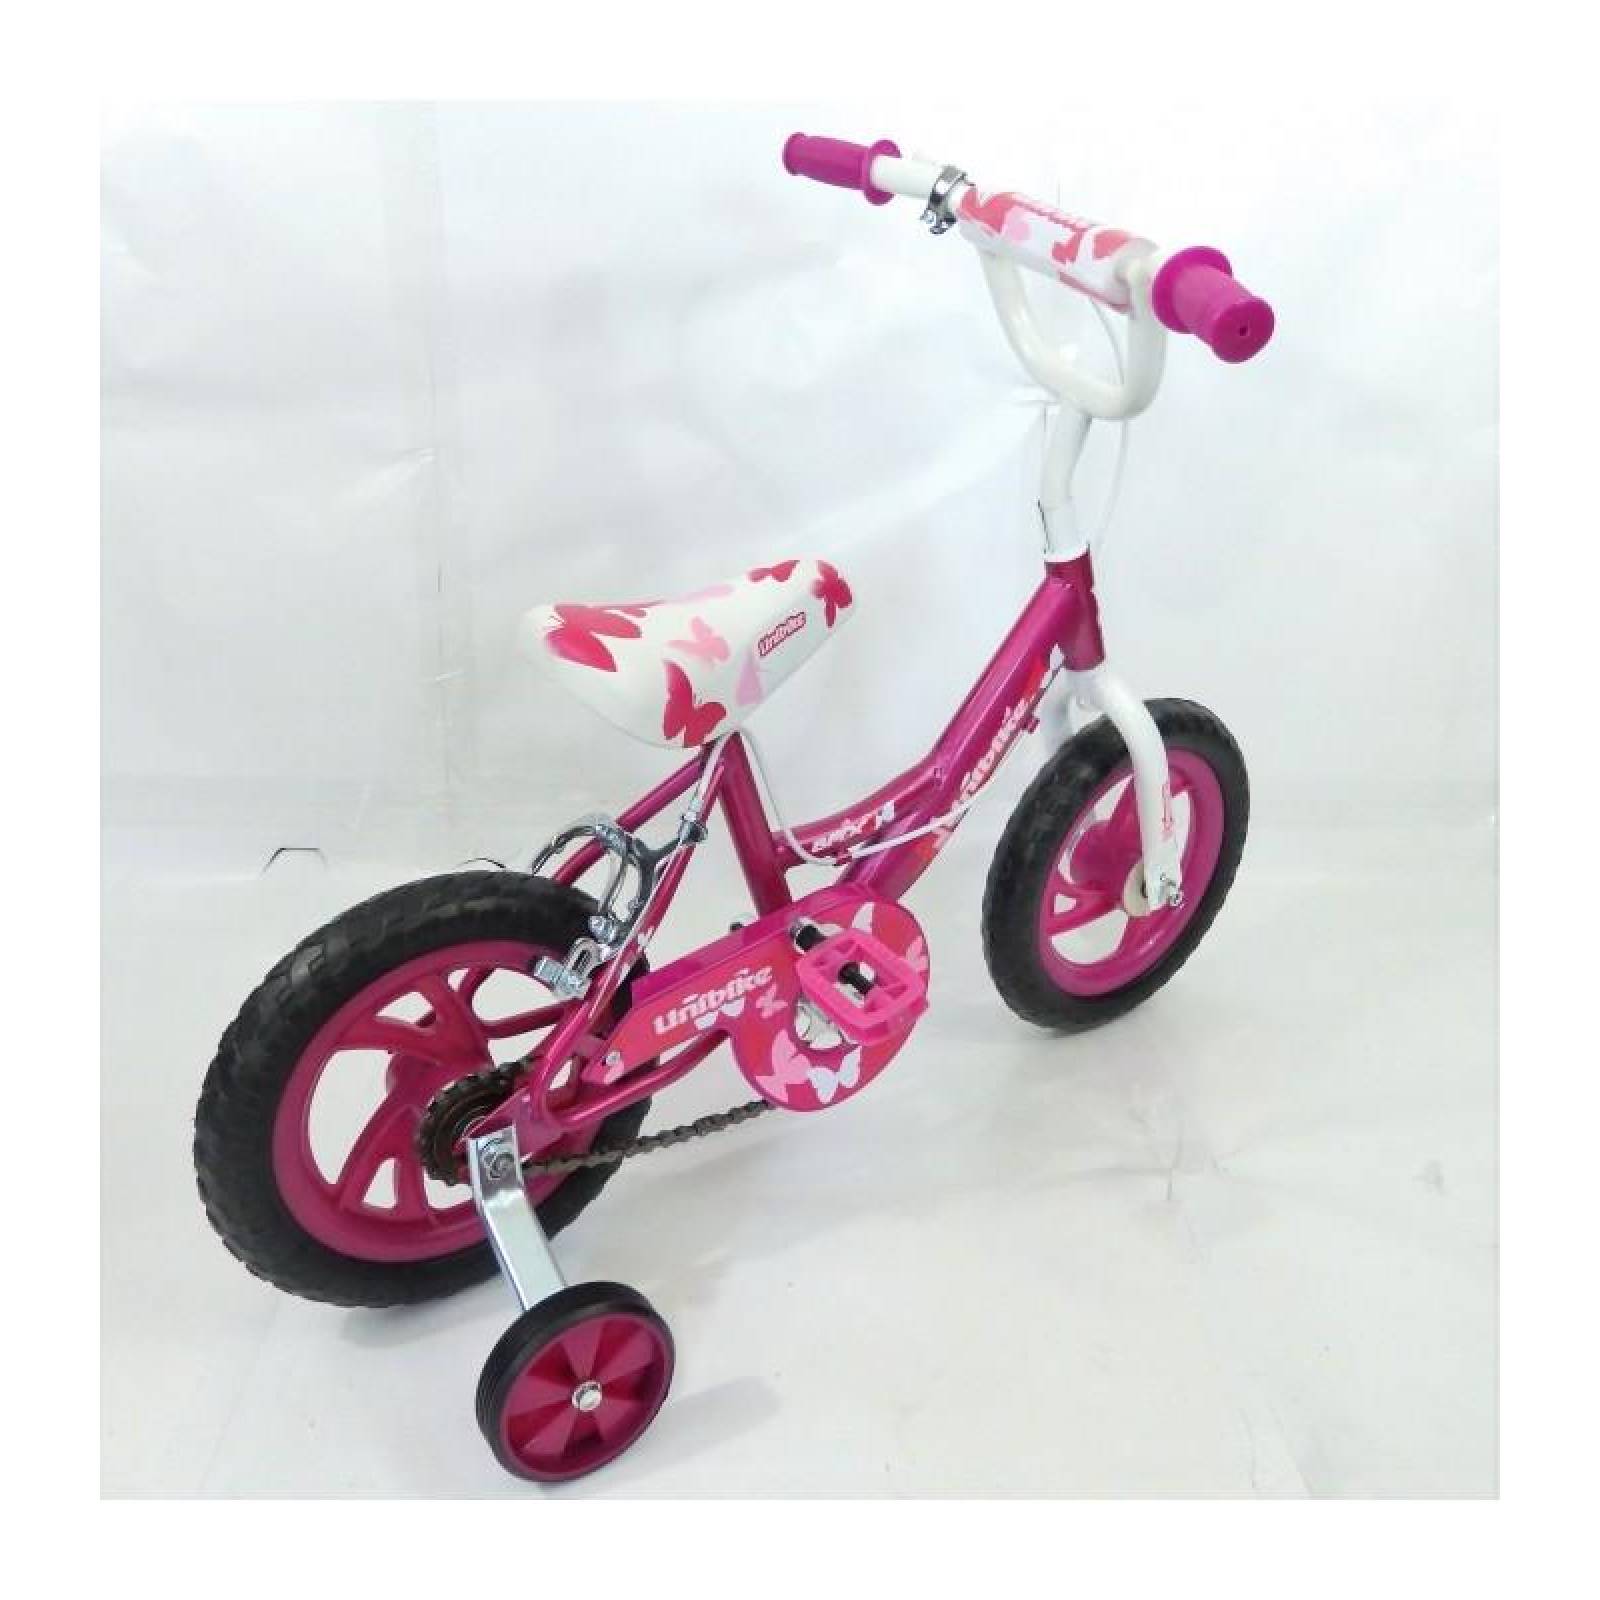 Bicicleta Infantil r12 Rodada 12 para niña Bicicletas Baratas 